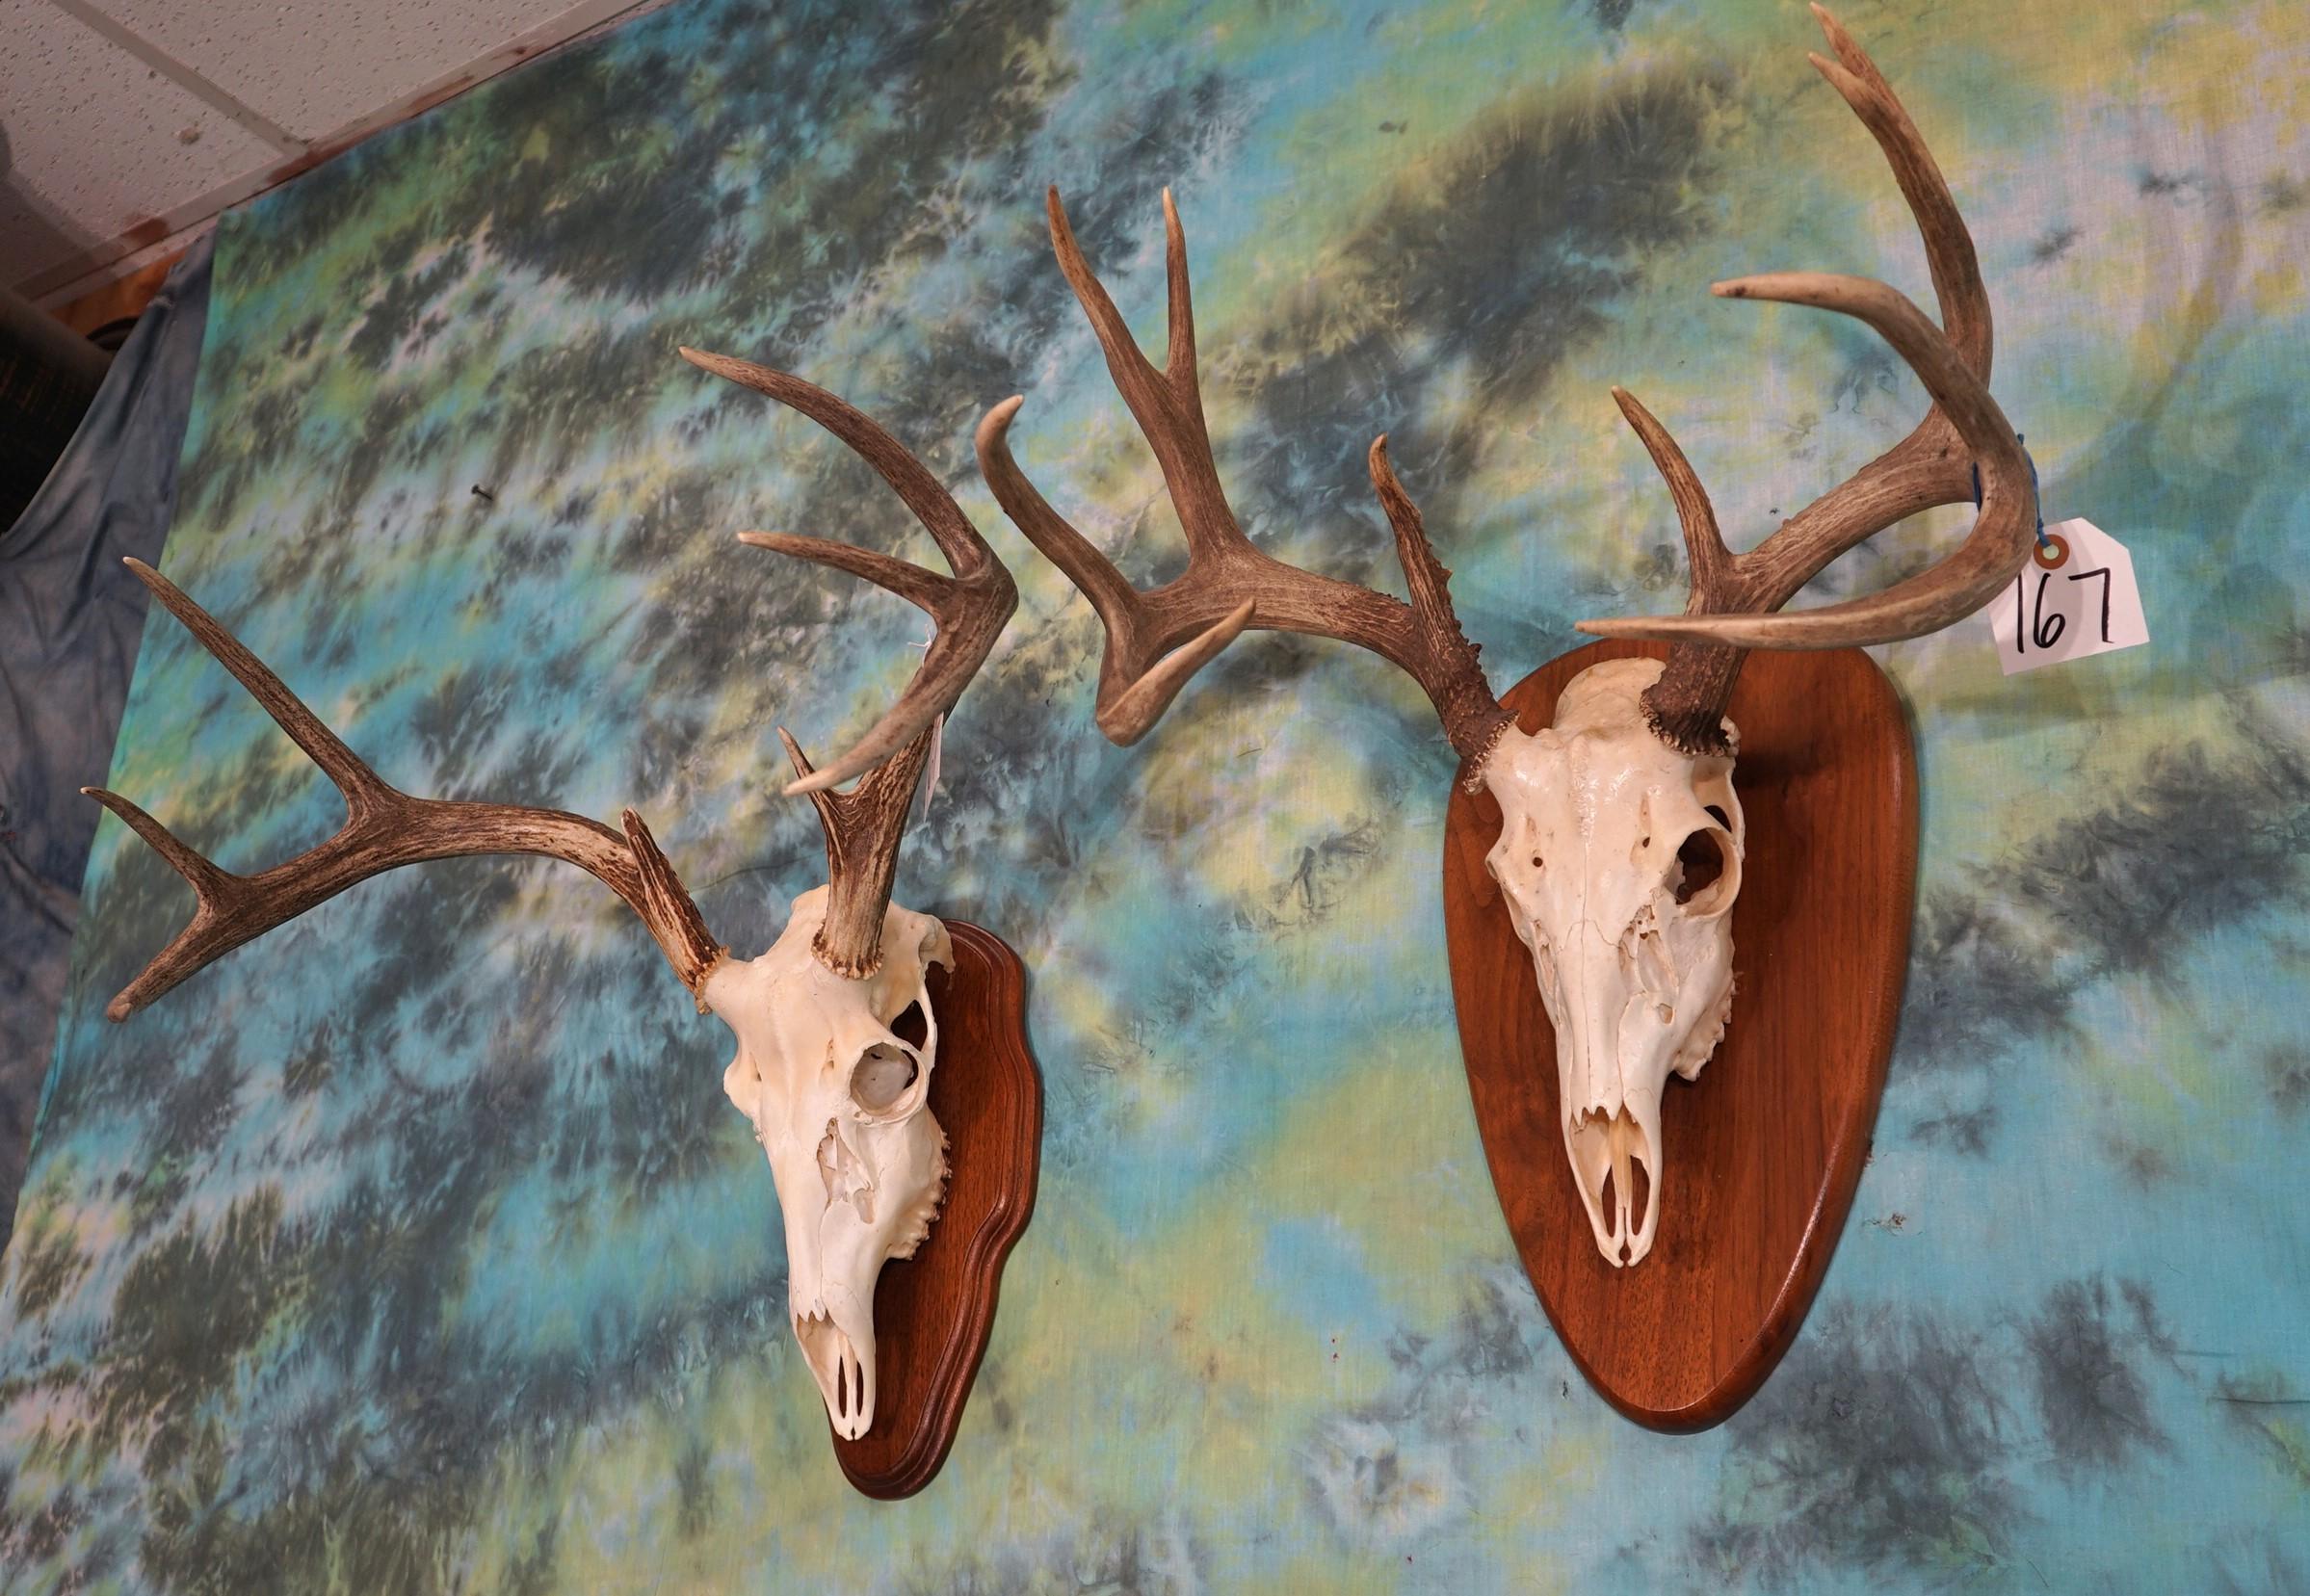 8pt. & 10pt. Whitetail Deer Skulls on Panels Taxidermy